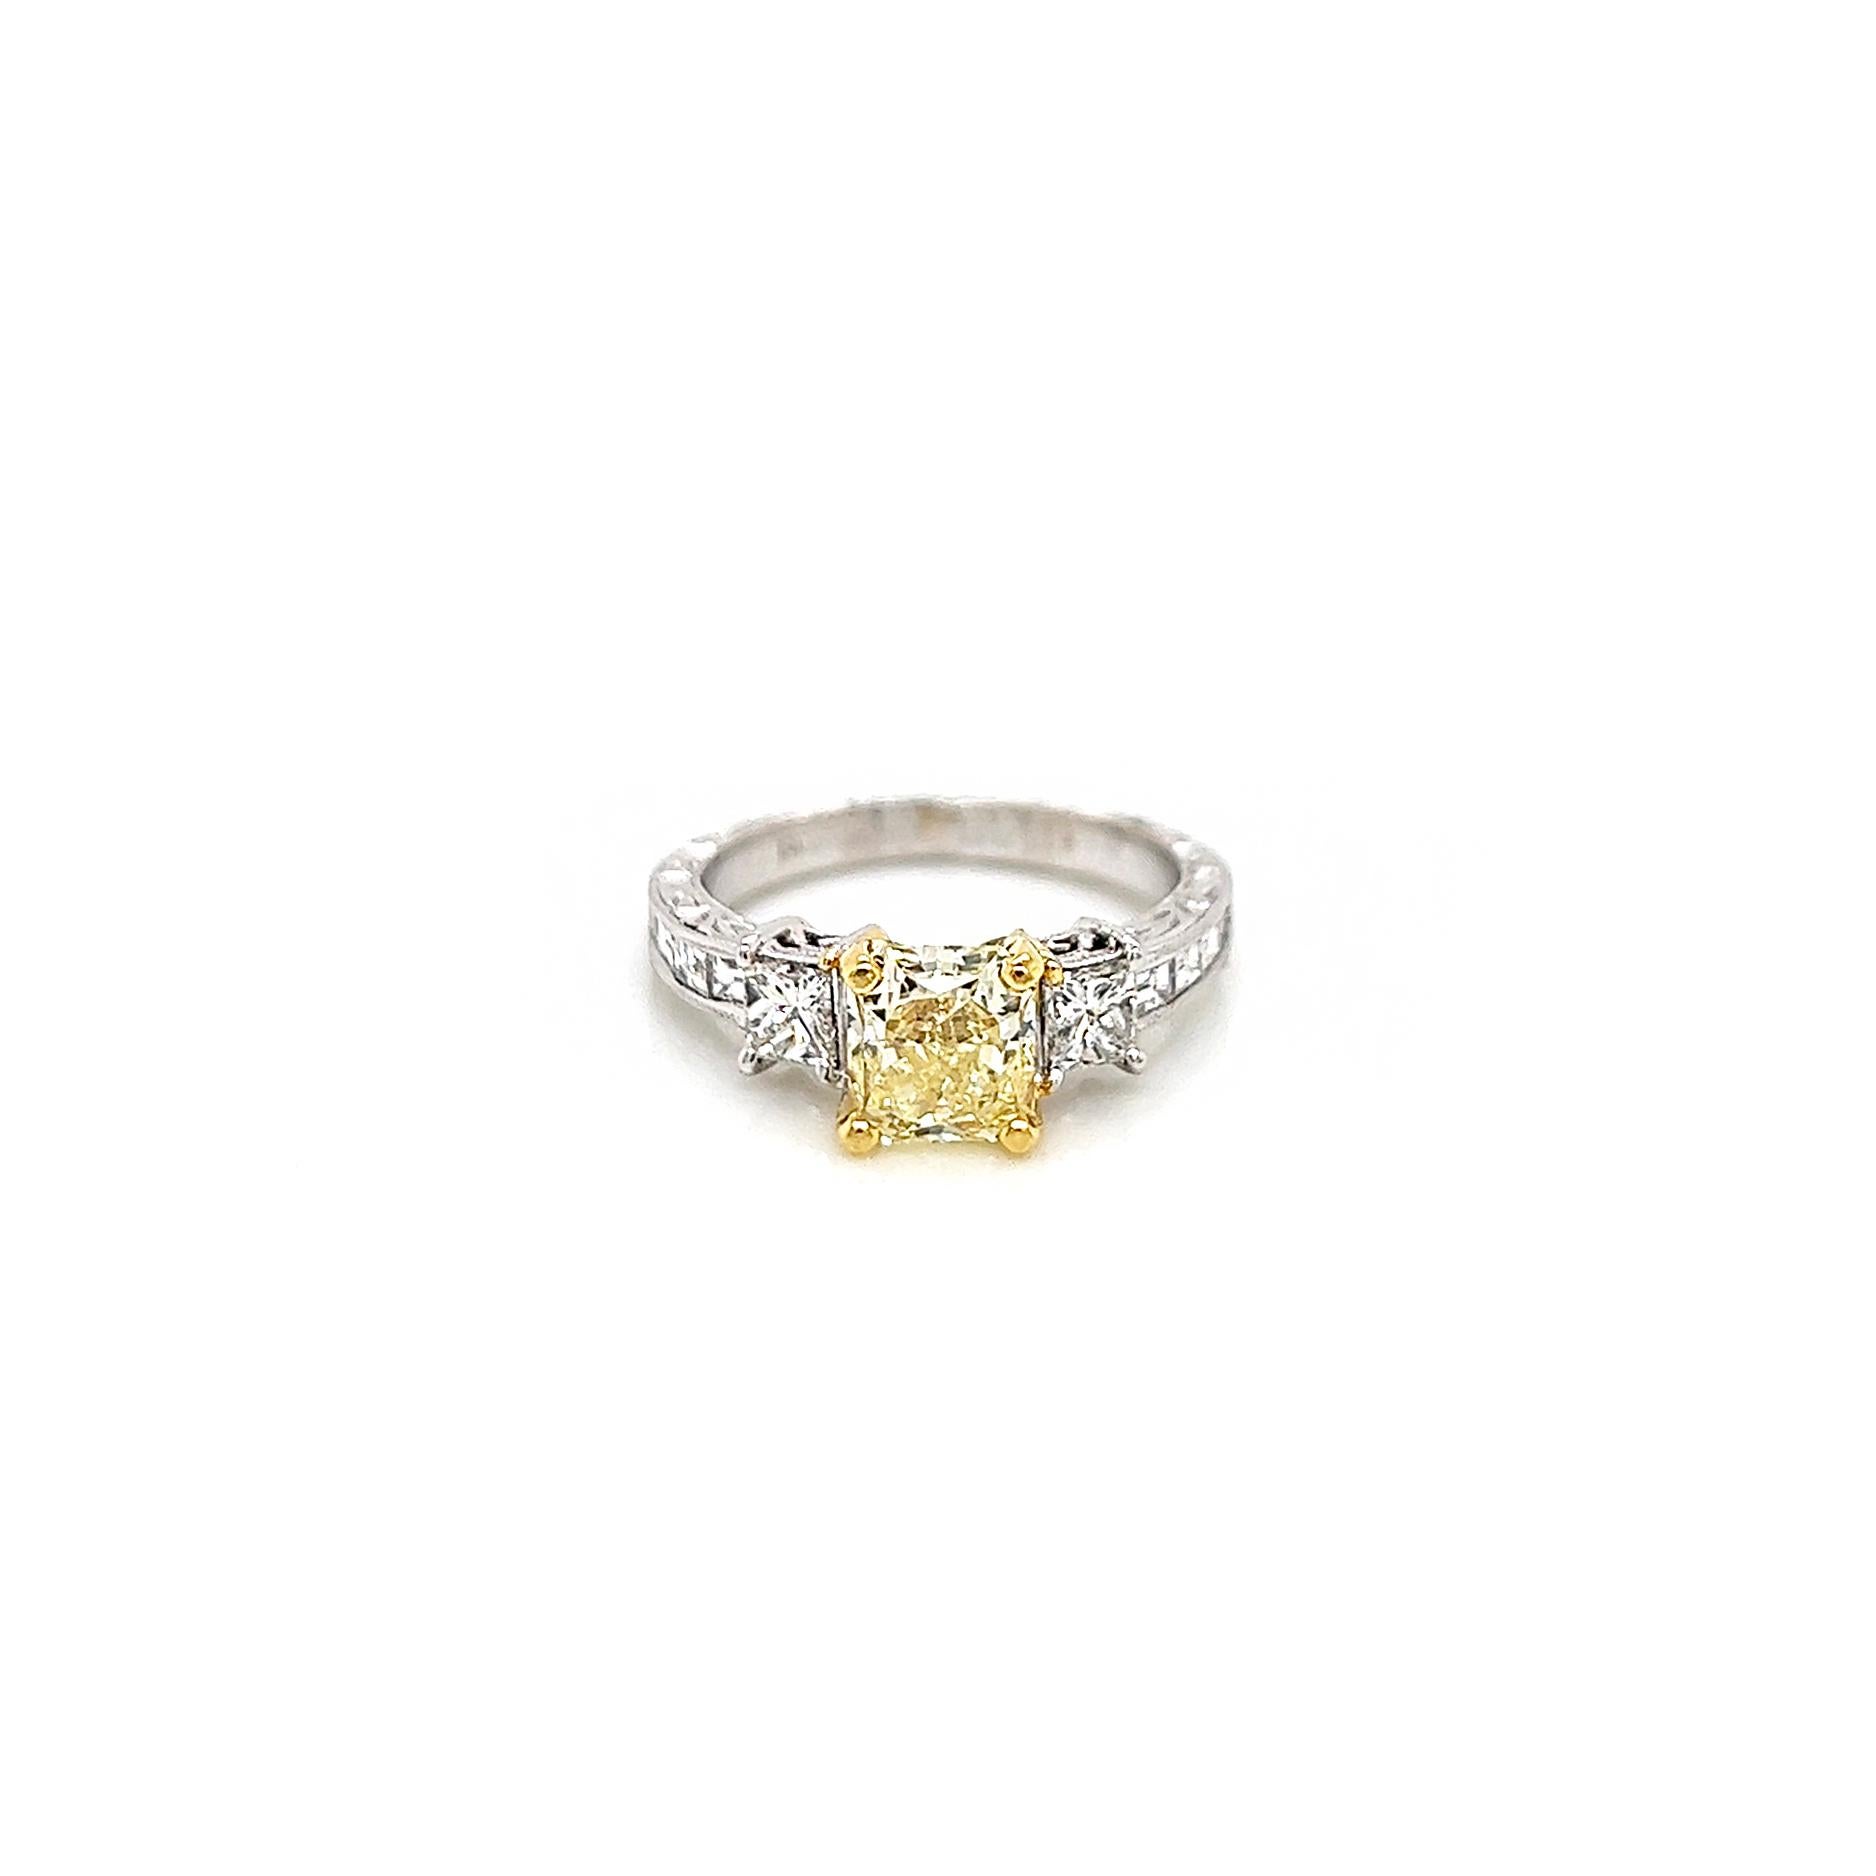 2.20 Gesamtkarat Fancy Yellow Diamond Ladies Verlobungsring. GIA-zertifiziert.

